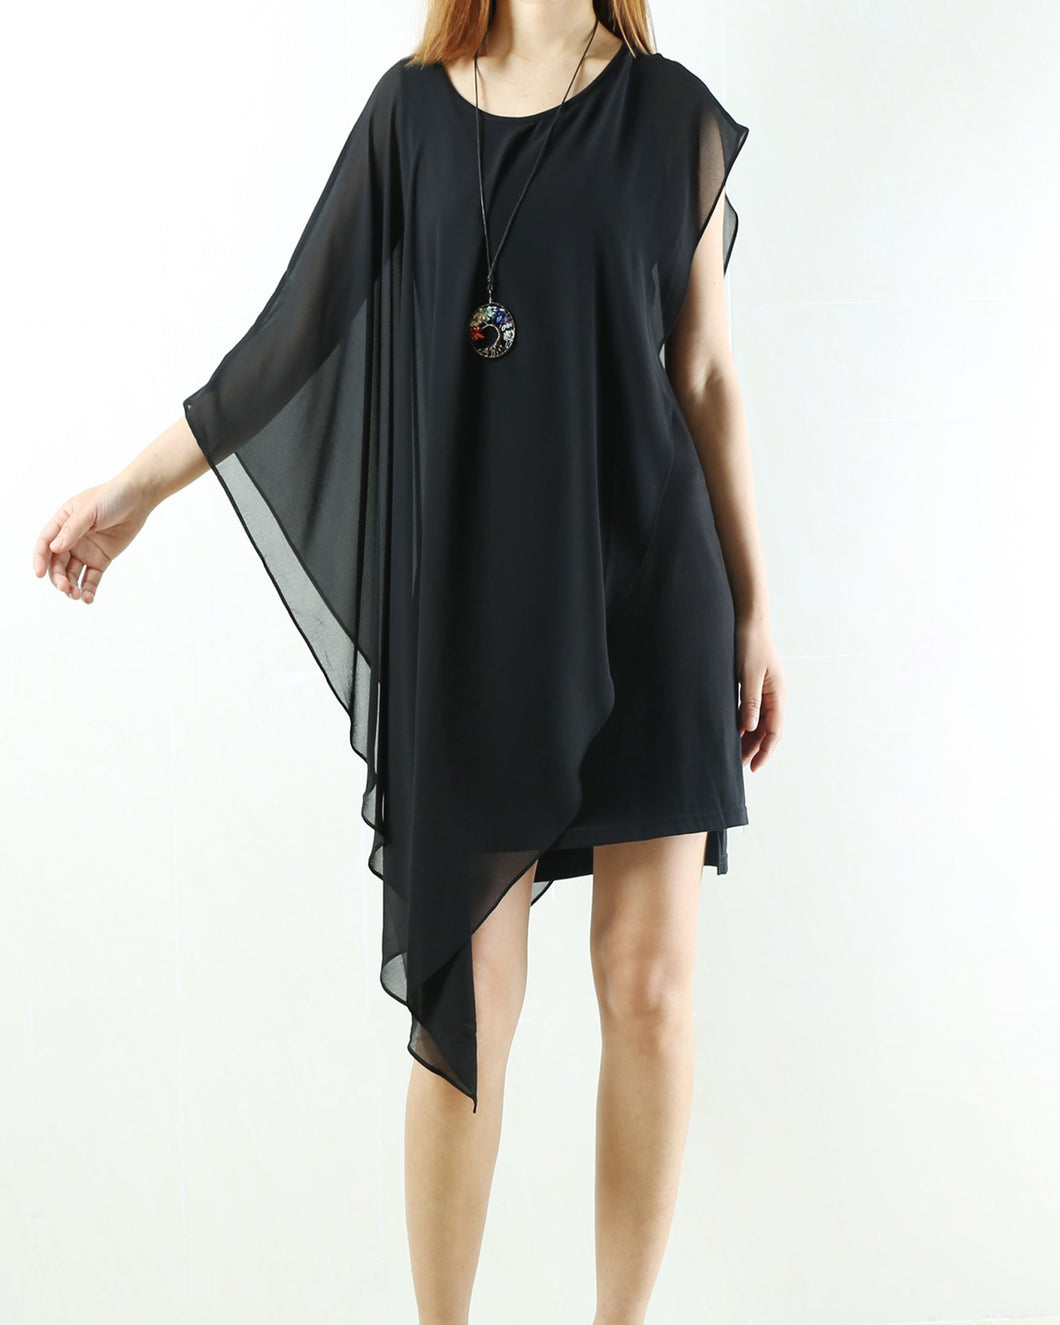 Women asymmetrical short sleeves chiffon dress/casual tunic top/ summer dress/customized oversized tunic dress(Q1926)